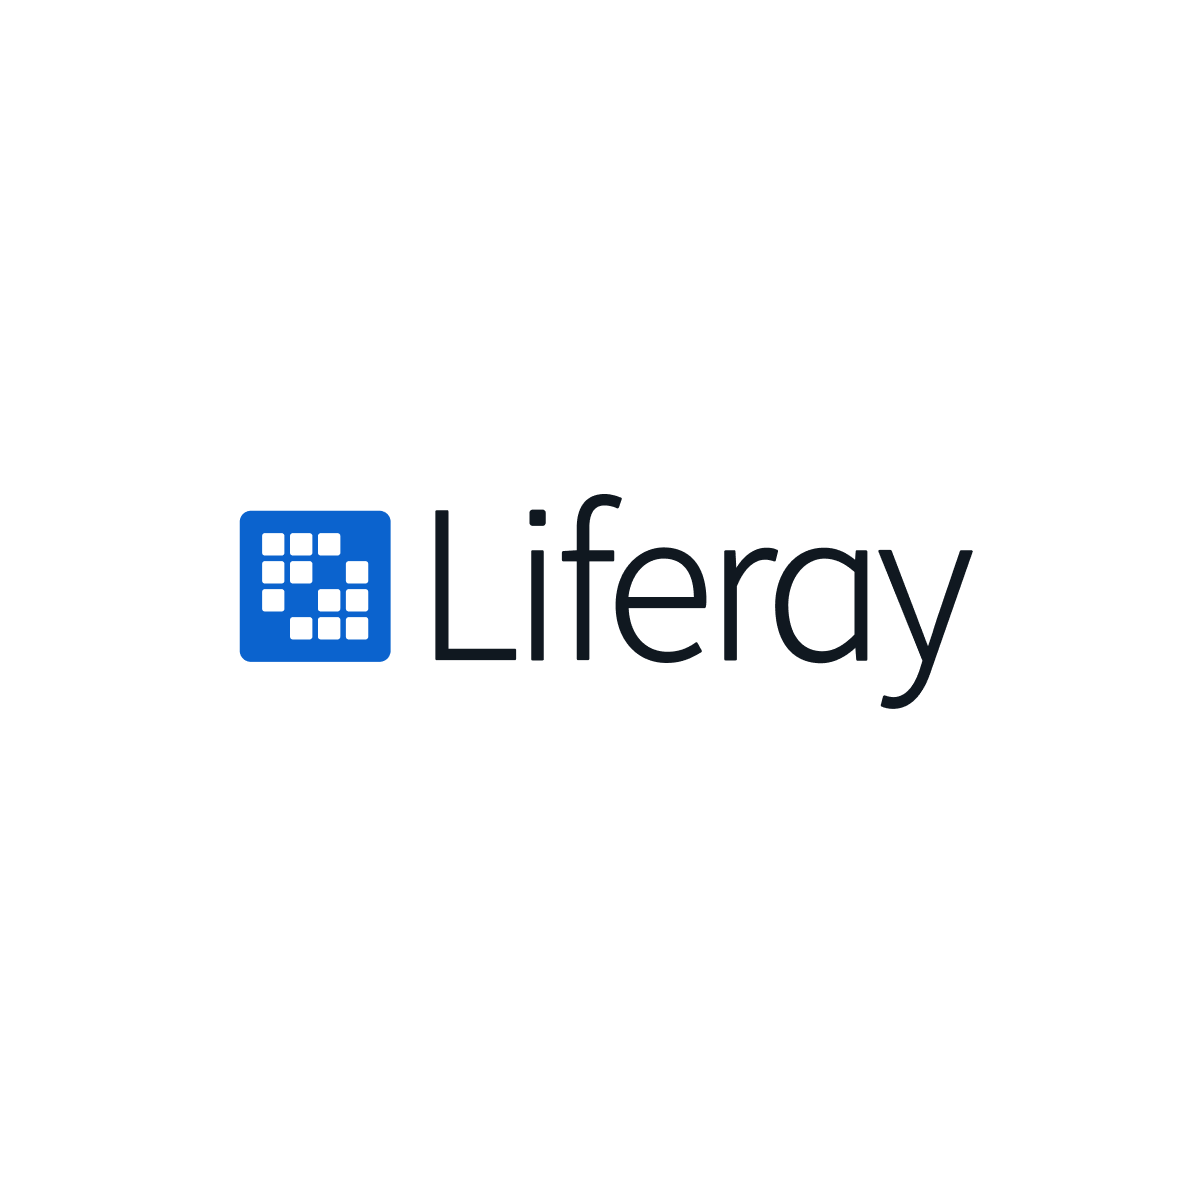 Lirefay